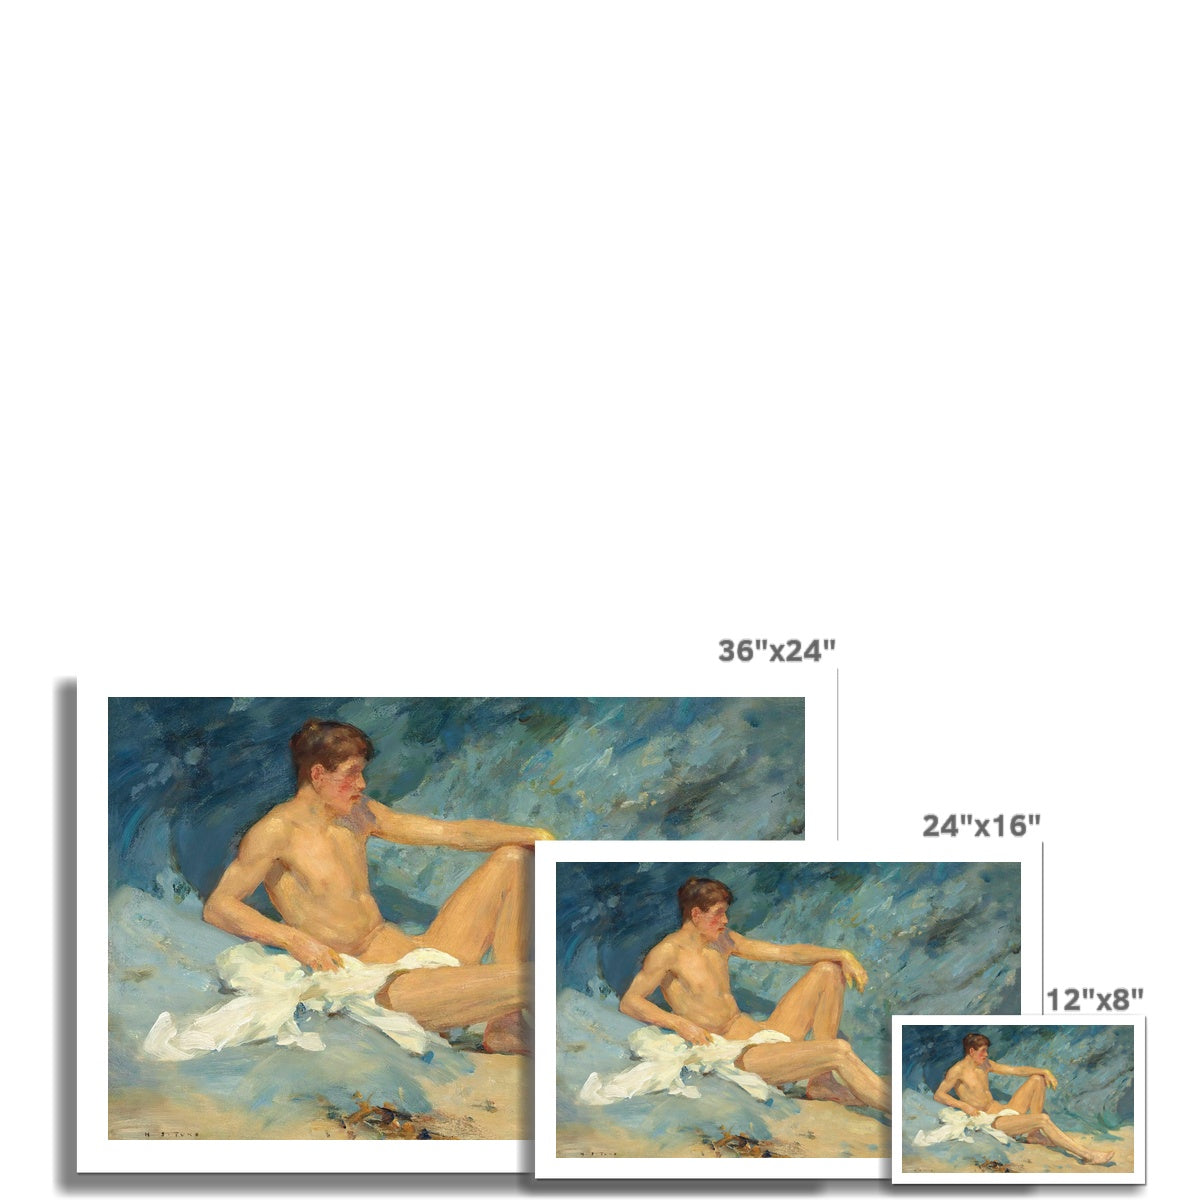 Henry Scott Tuke Open Edition Art Print. A Male Nude Reclining on the Rocks. Art Gallery Historic Art